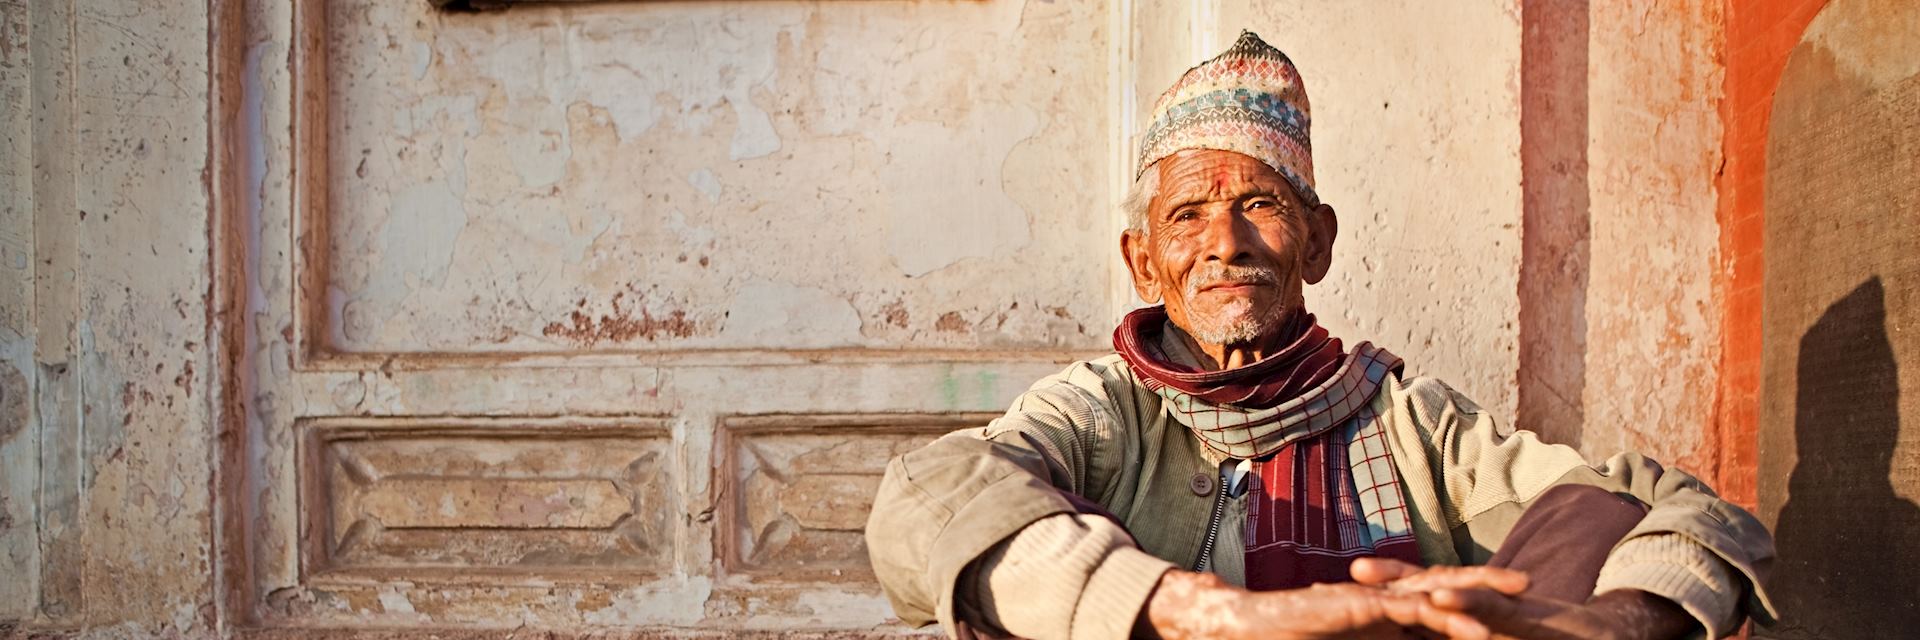 Nepalese man